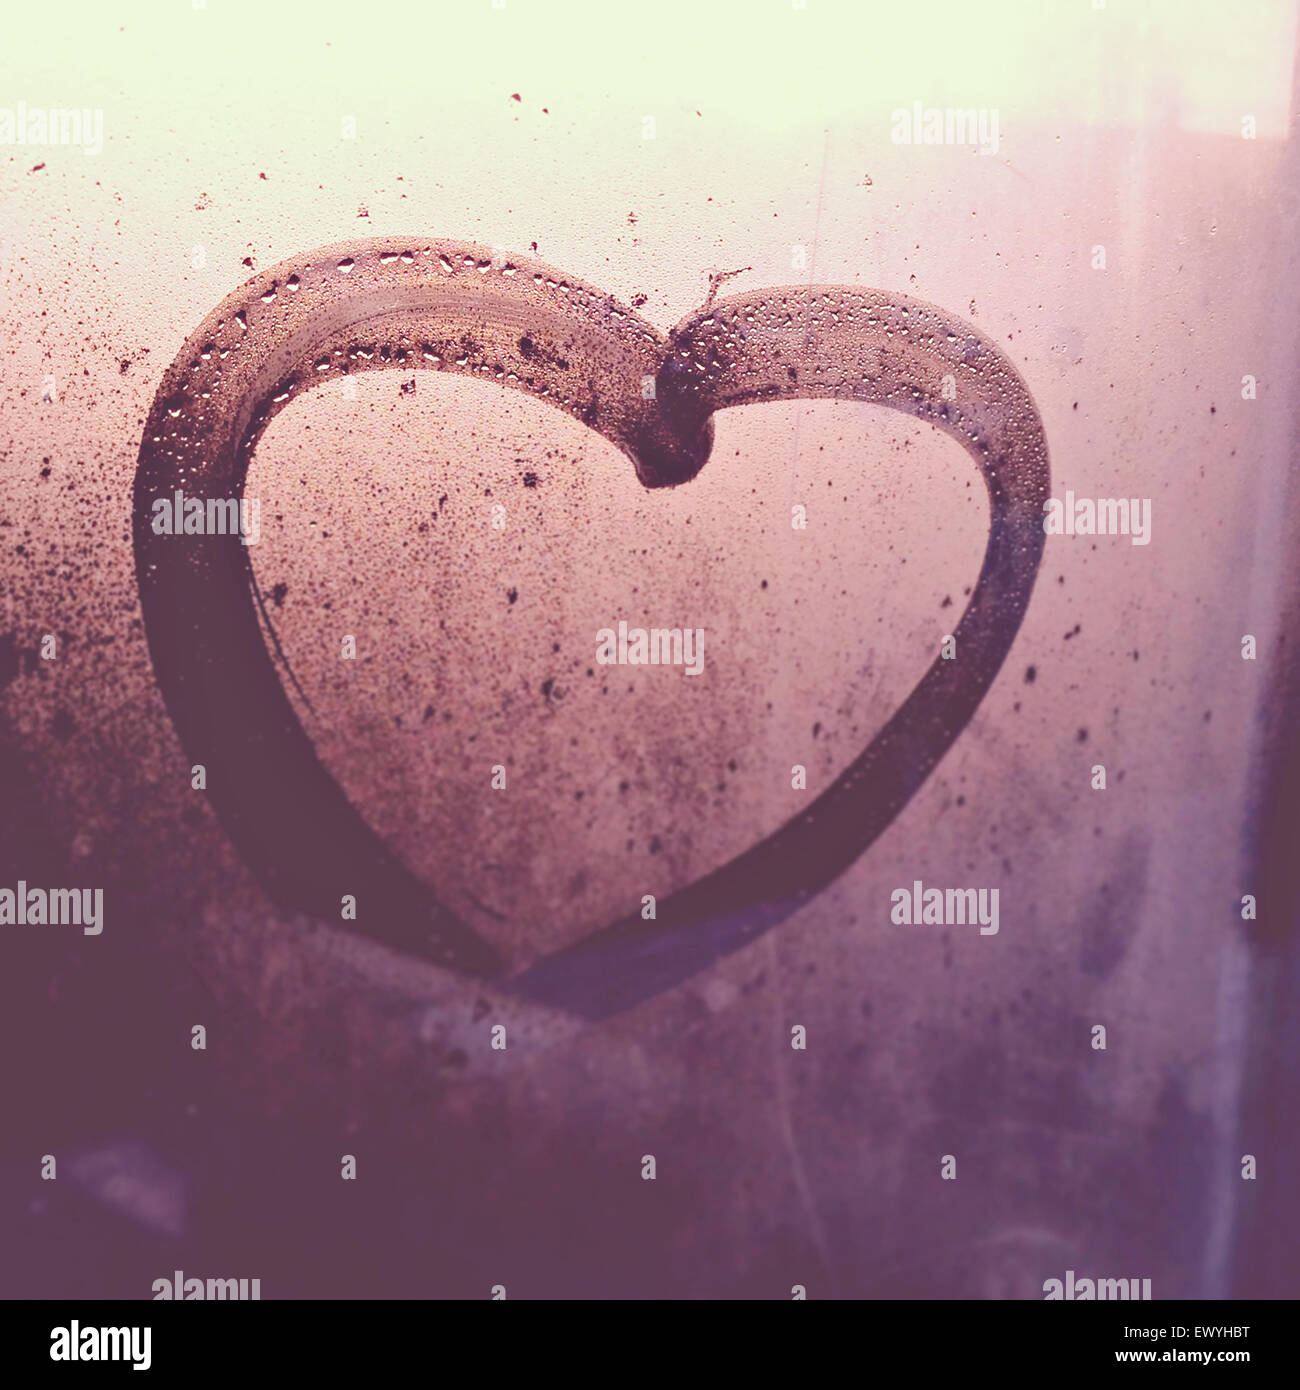 Heart drawn on a wet window Stock Photo